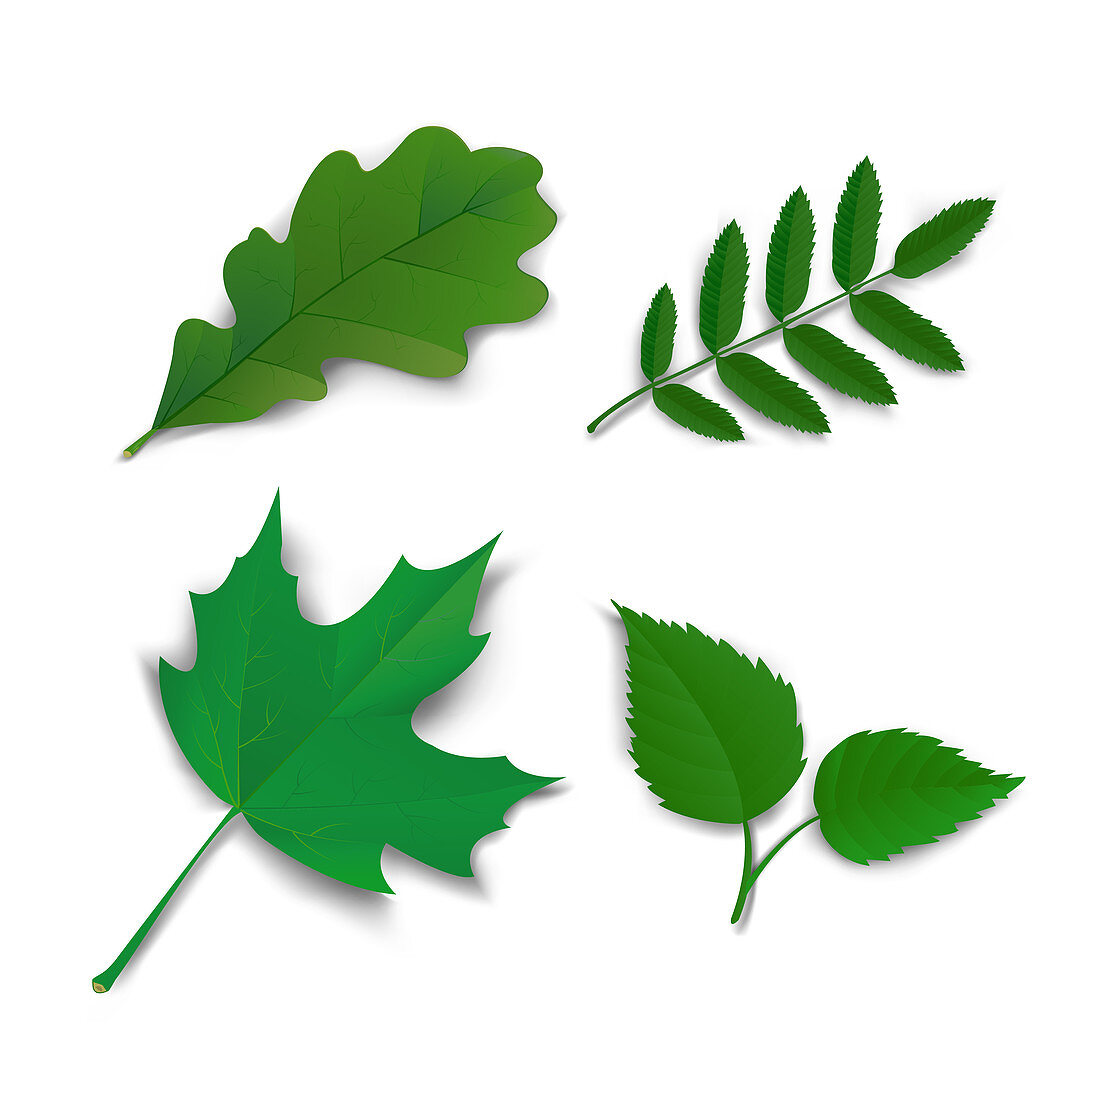 Oak, maple, ash and birch leaves, illustration